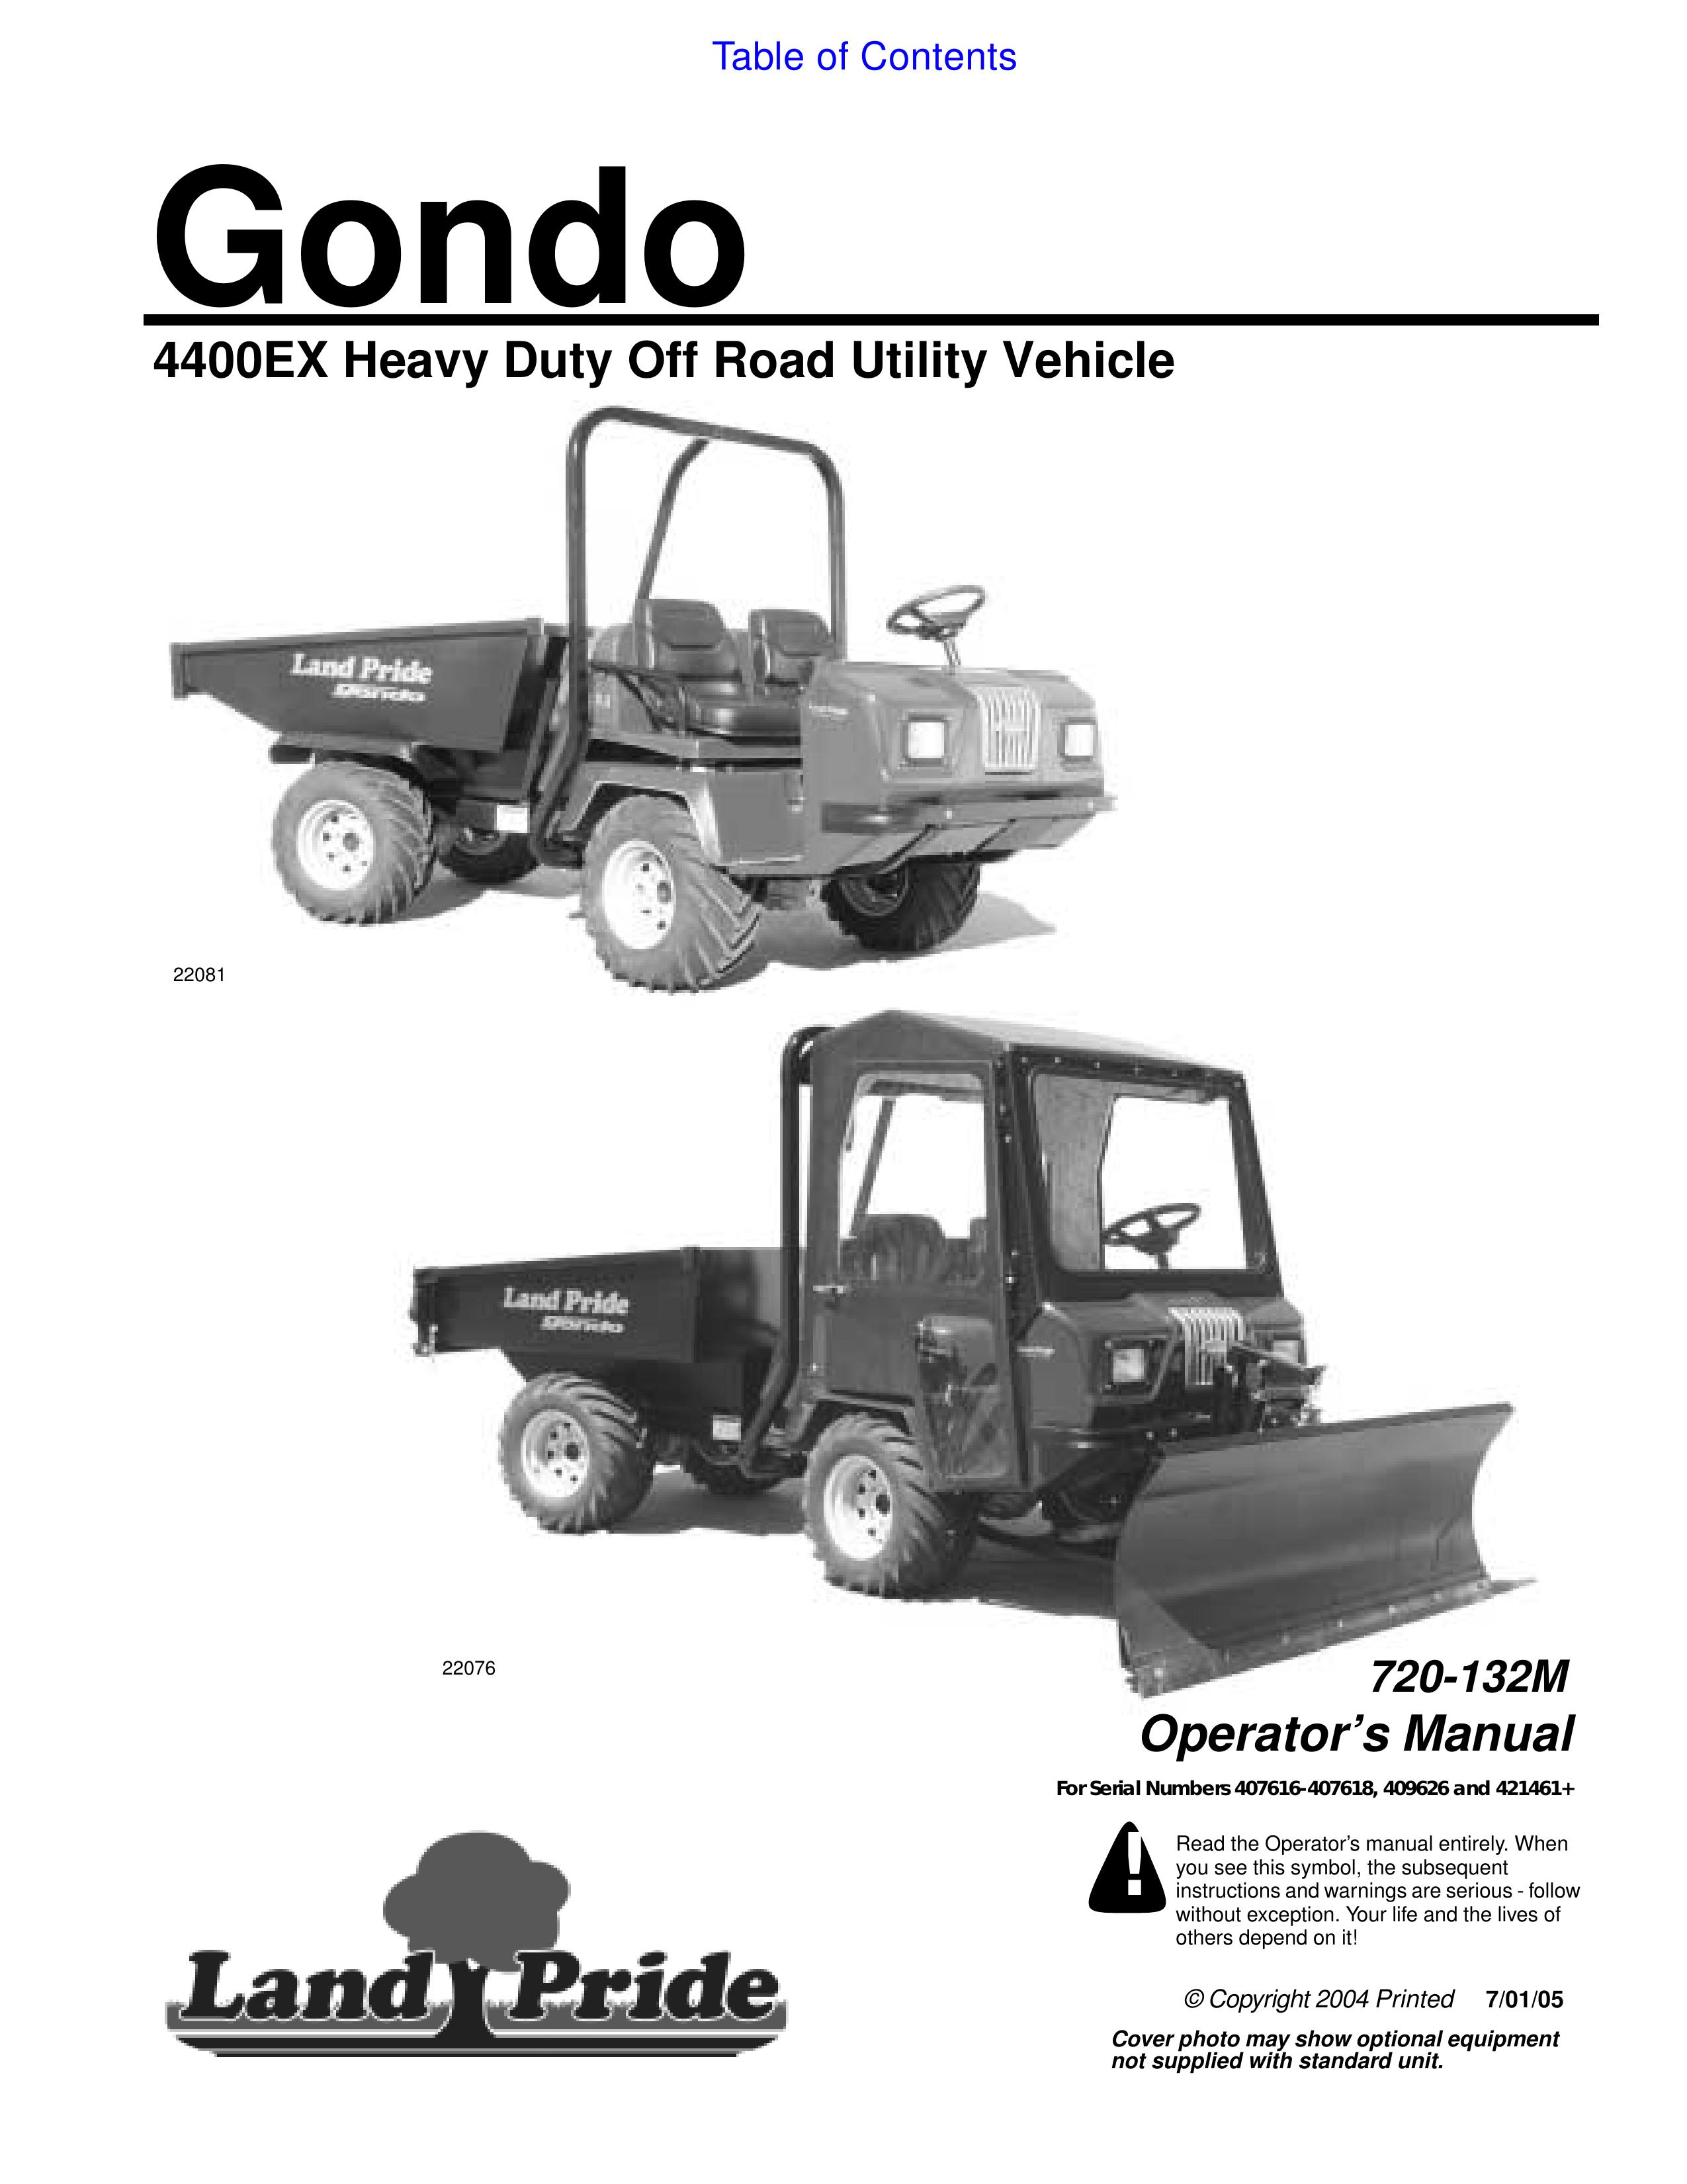 Land Pride 720-132M Lawn Mower User Manual